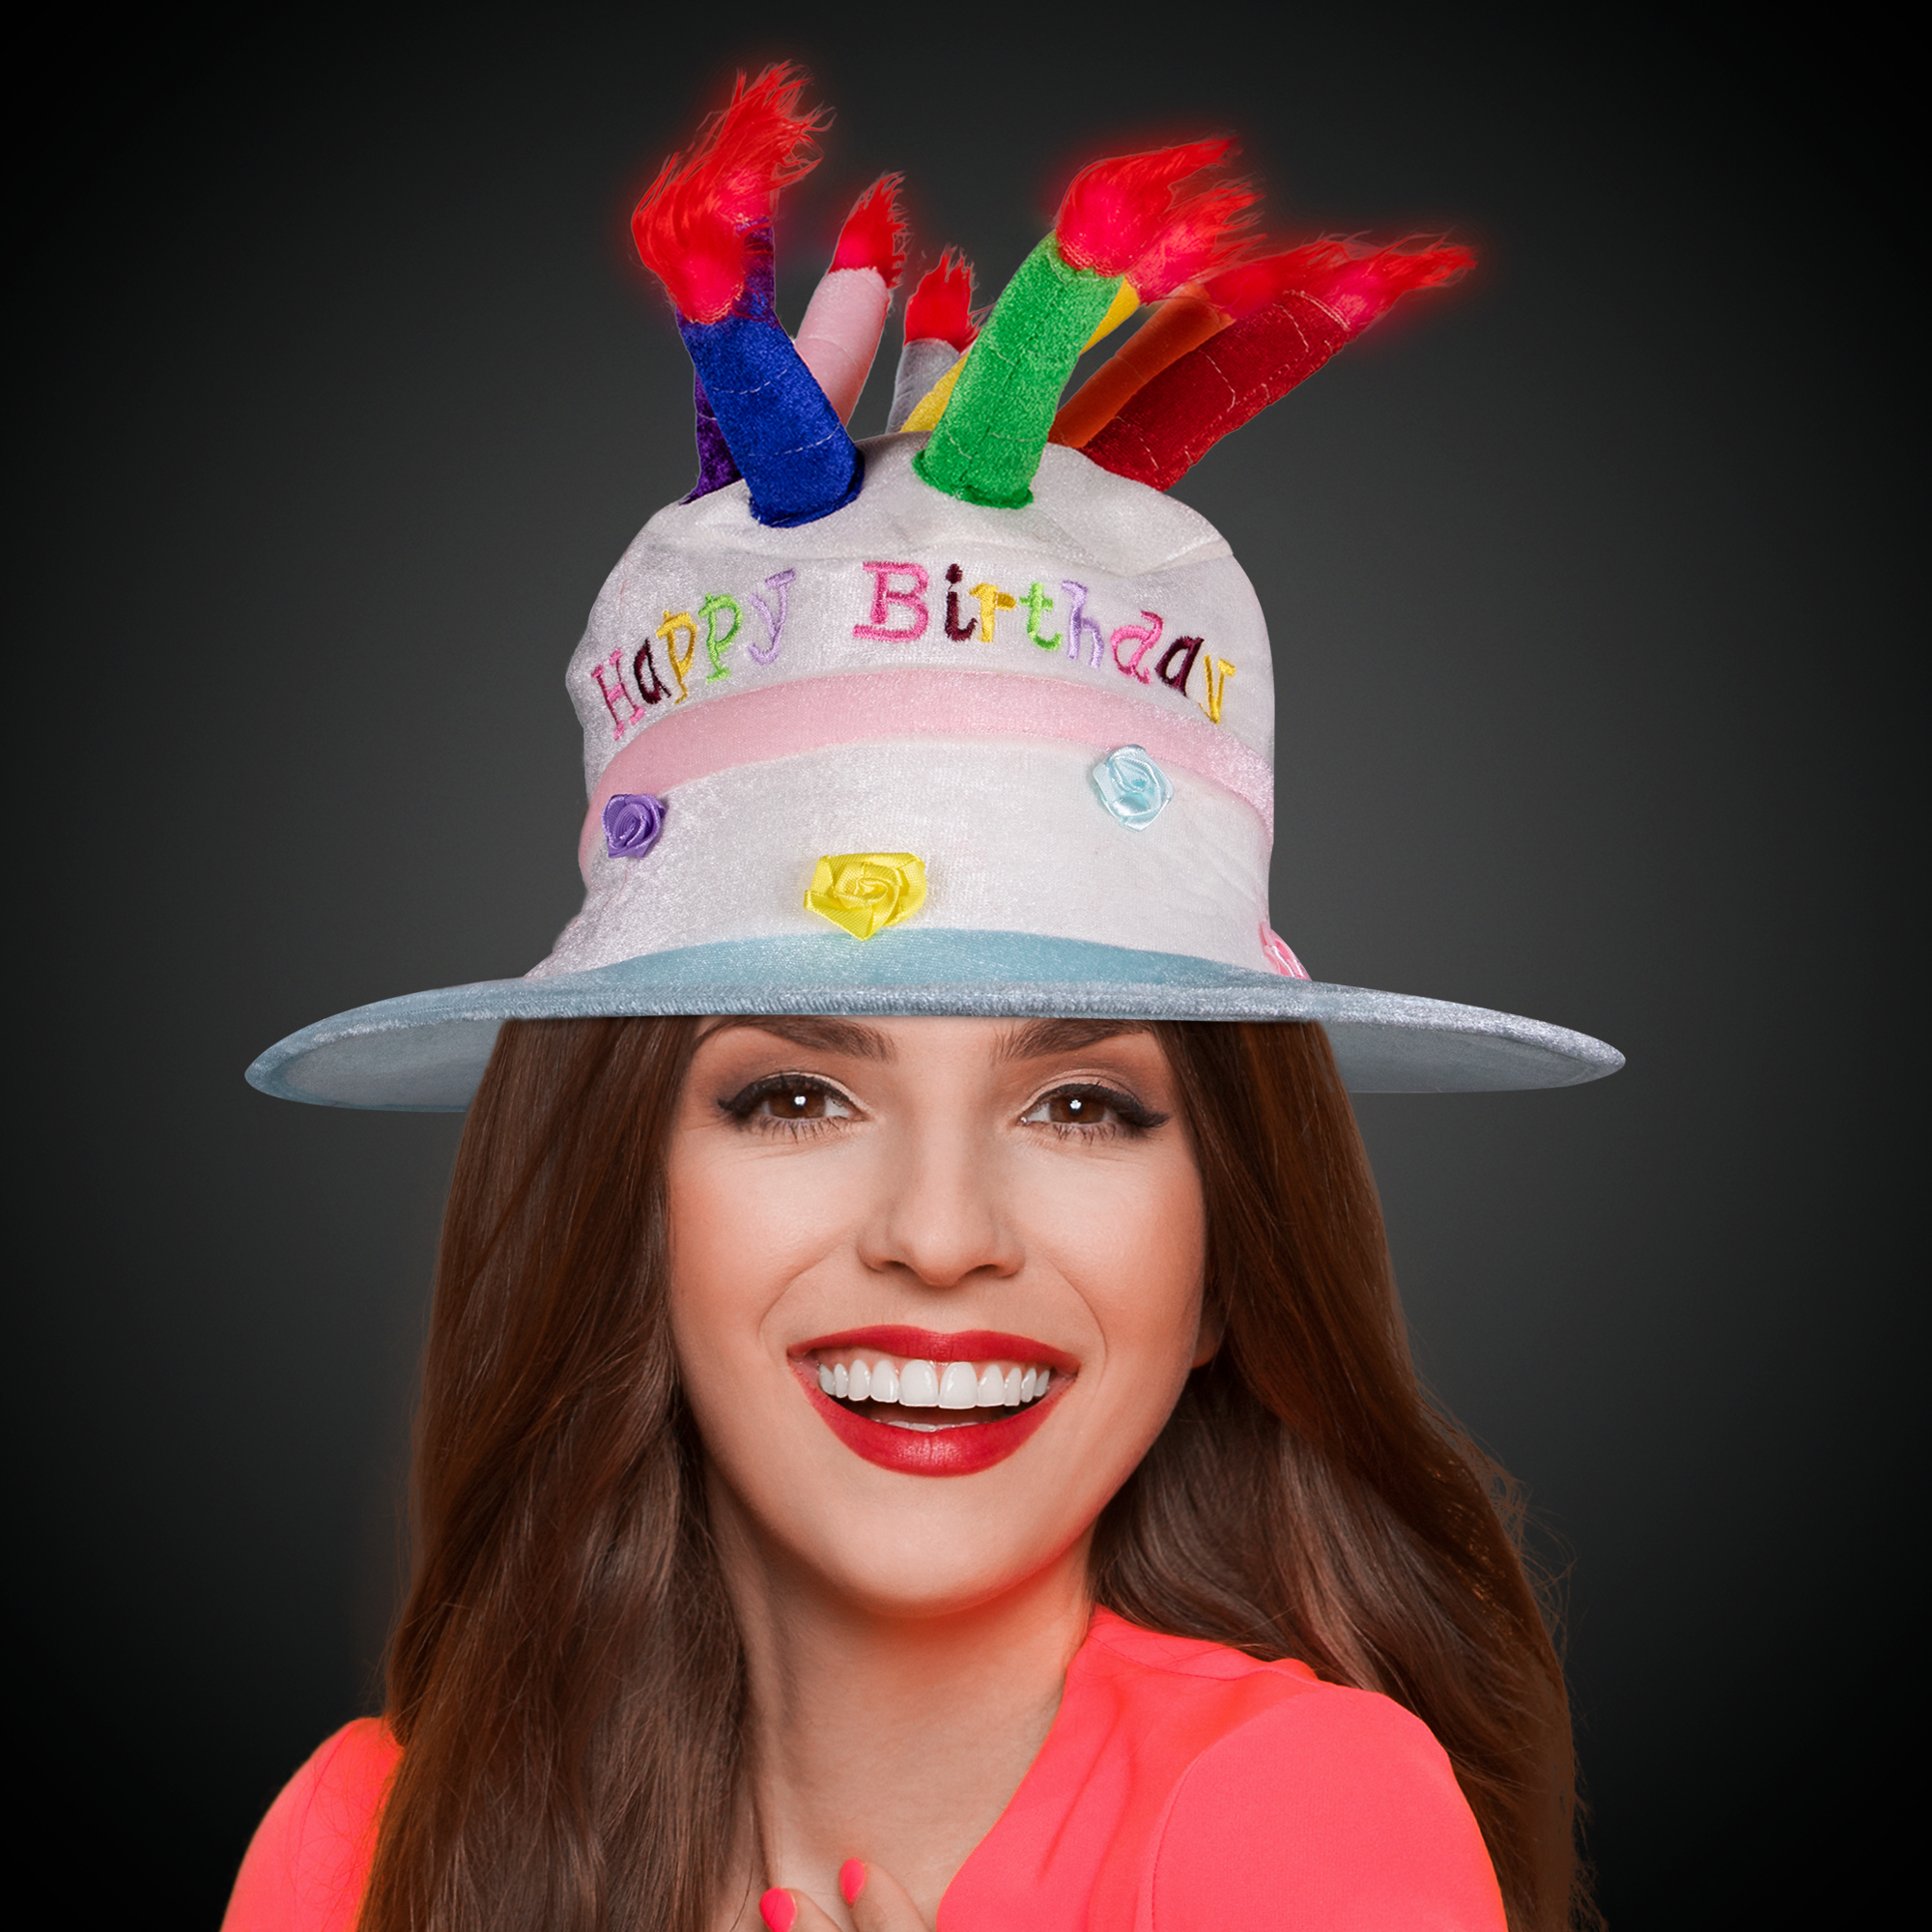 LED Birthday Cake Hat by Windy City Novelties